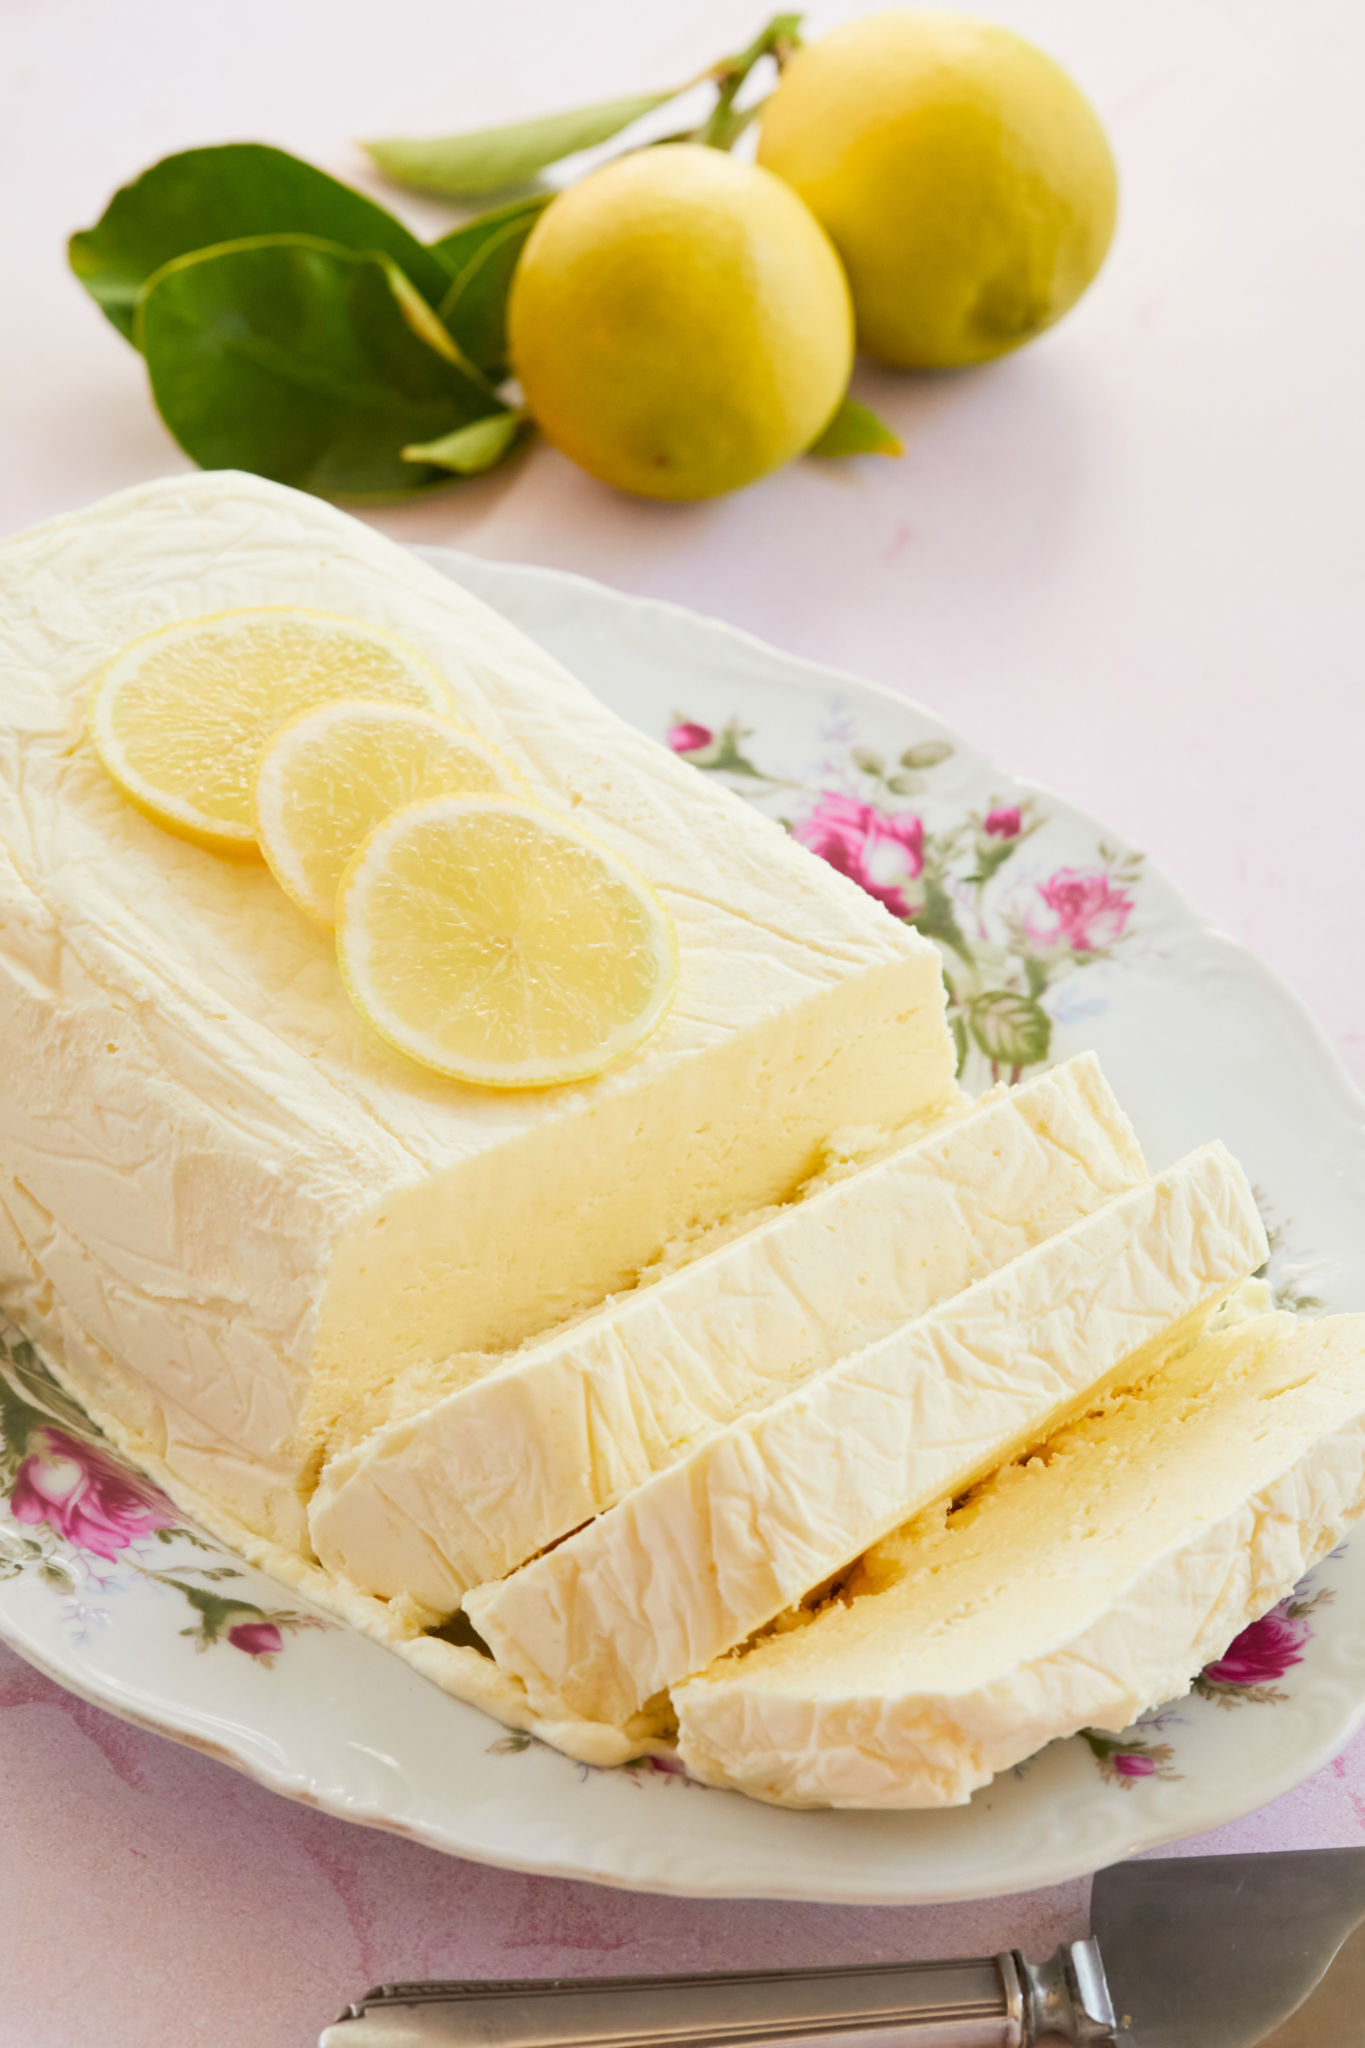 Lemon Semifreddo cut into thick, sweet slices, next to some whole lemons.